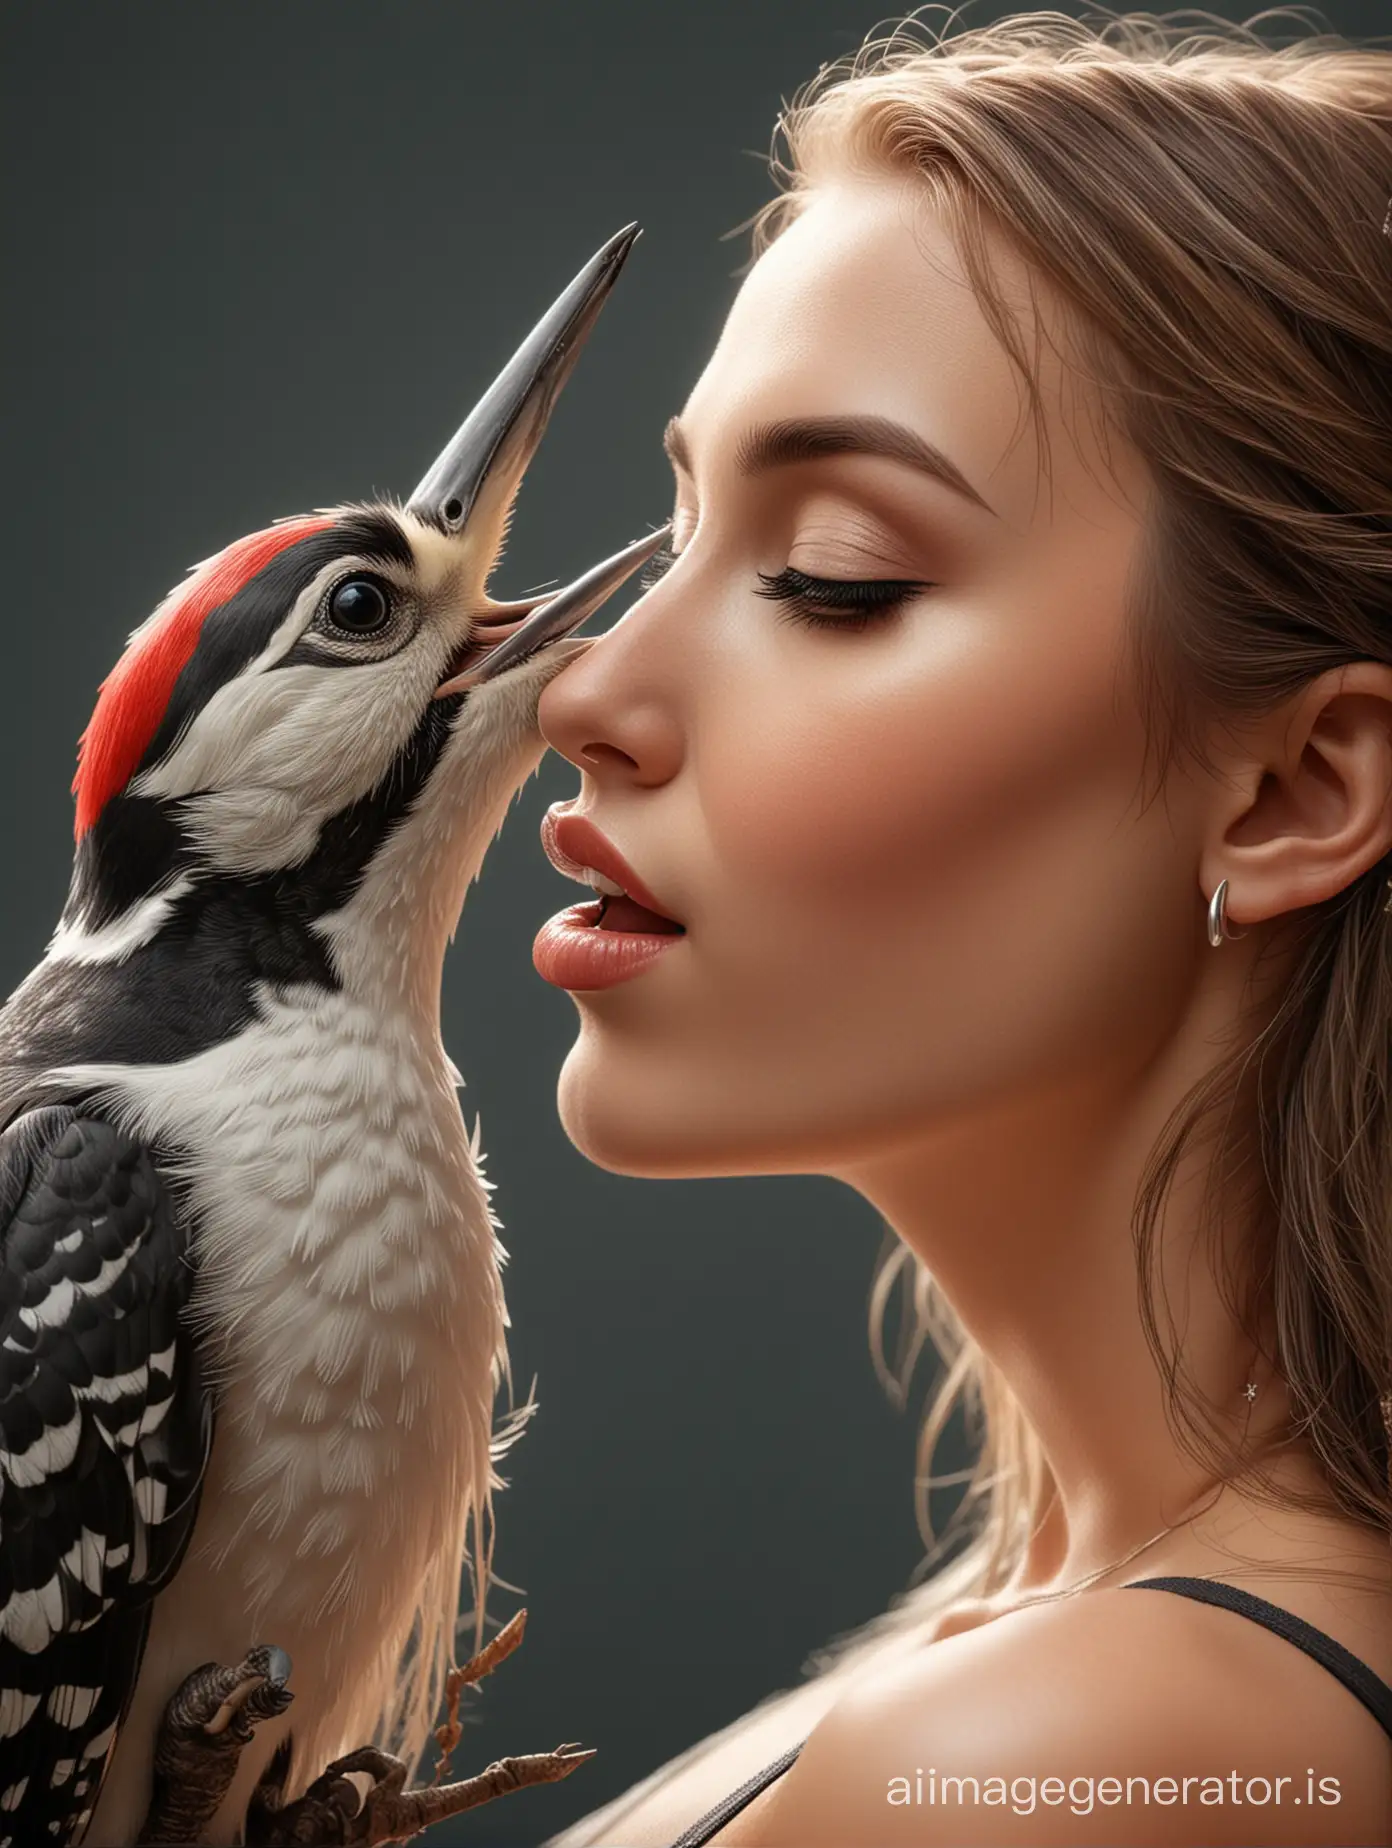 Realistic-HighResolution-Woodpecker-Kissing-Cute-Woman